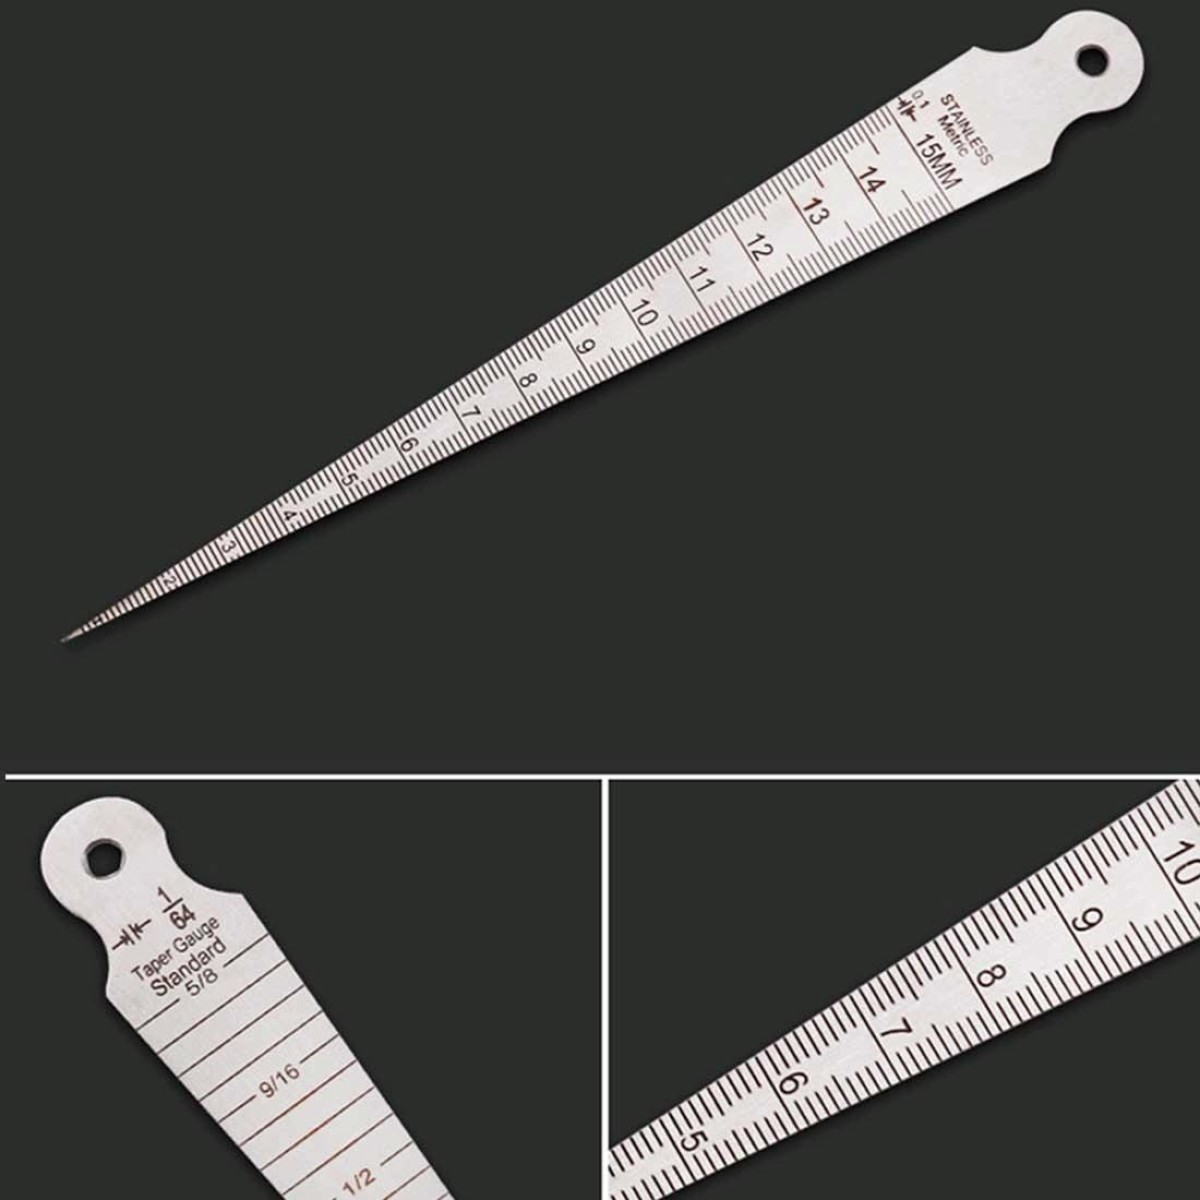 Wedge Feeler Gap 1-15mm Thick Stainless Steel Ruler Inspection Taper Gauge Metric Imperial Measure Tool